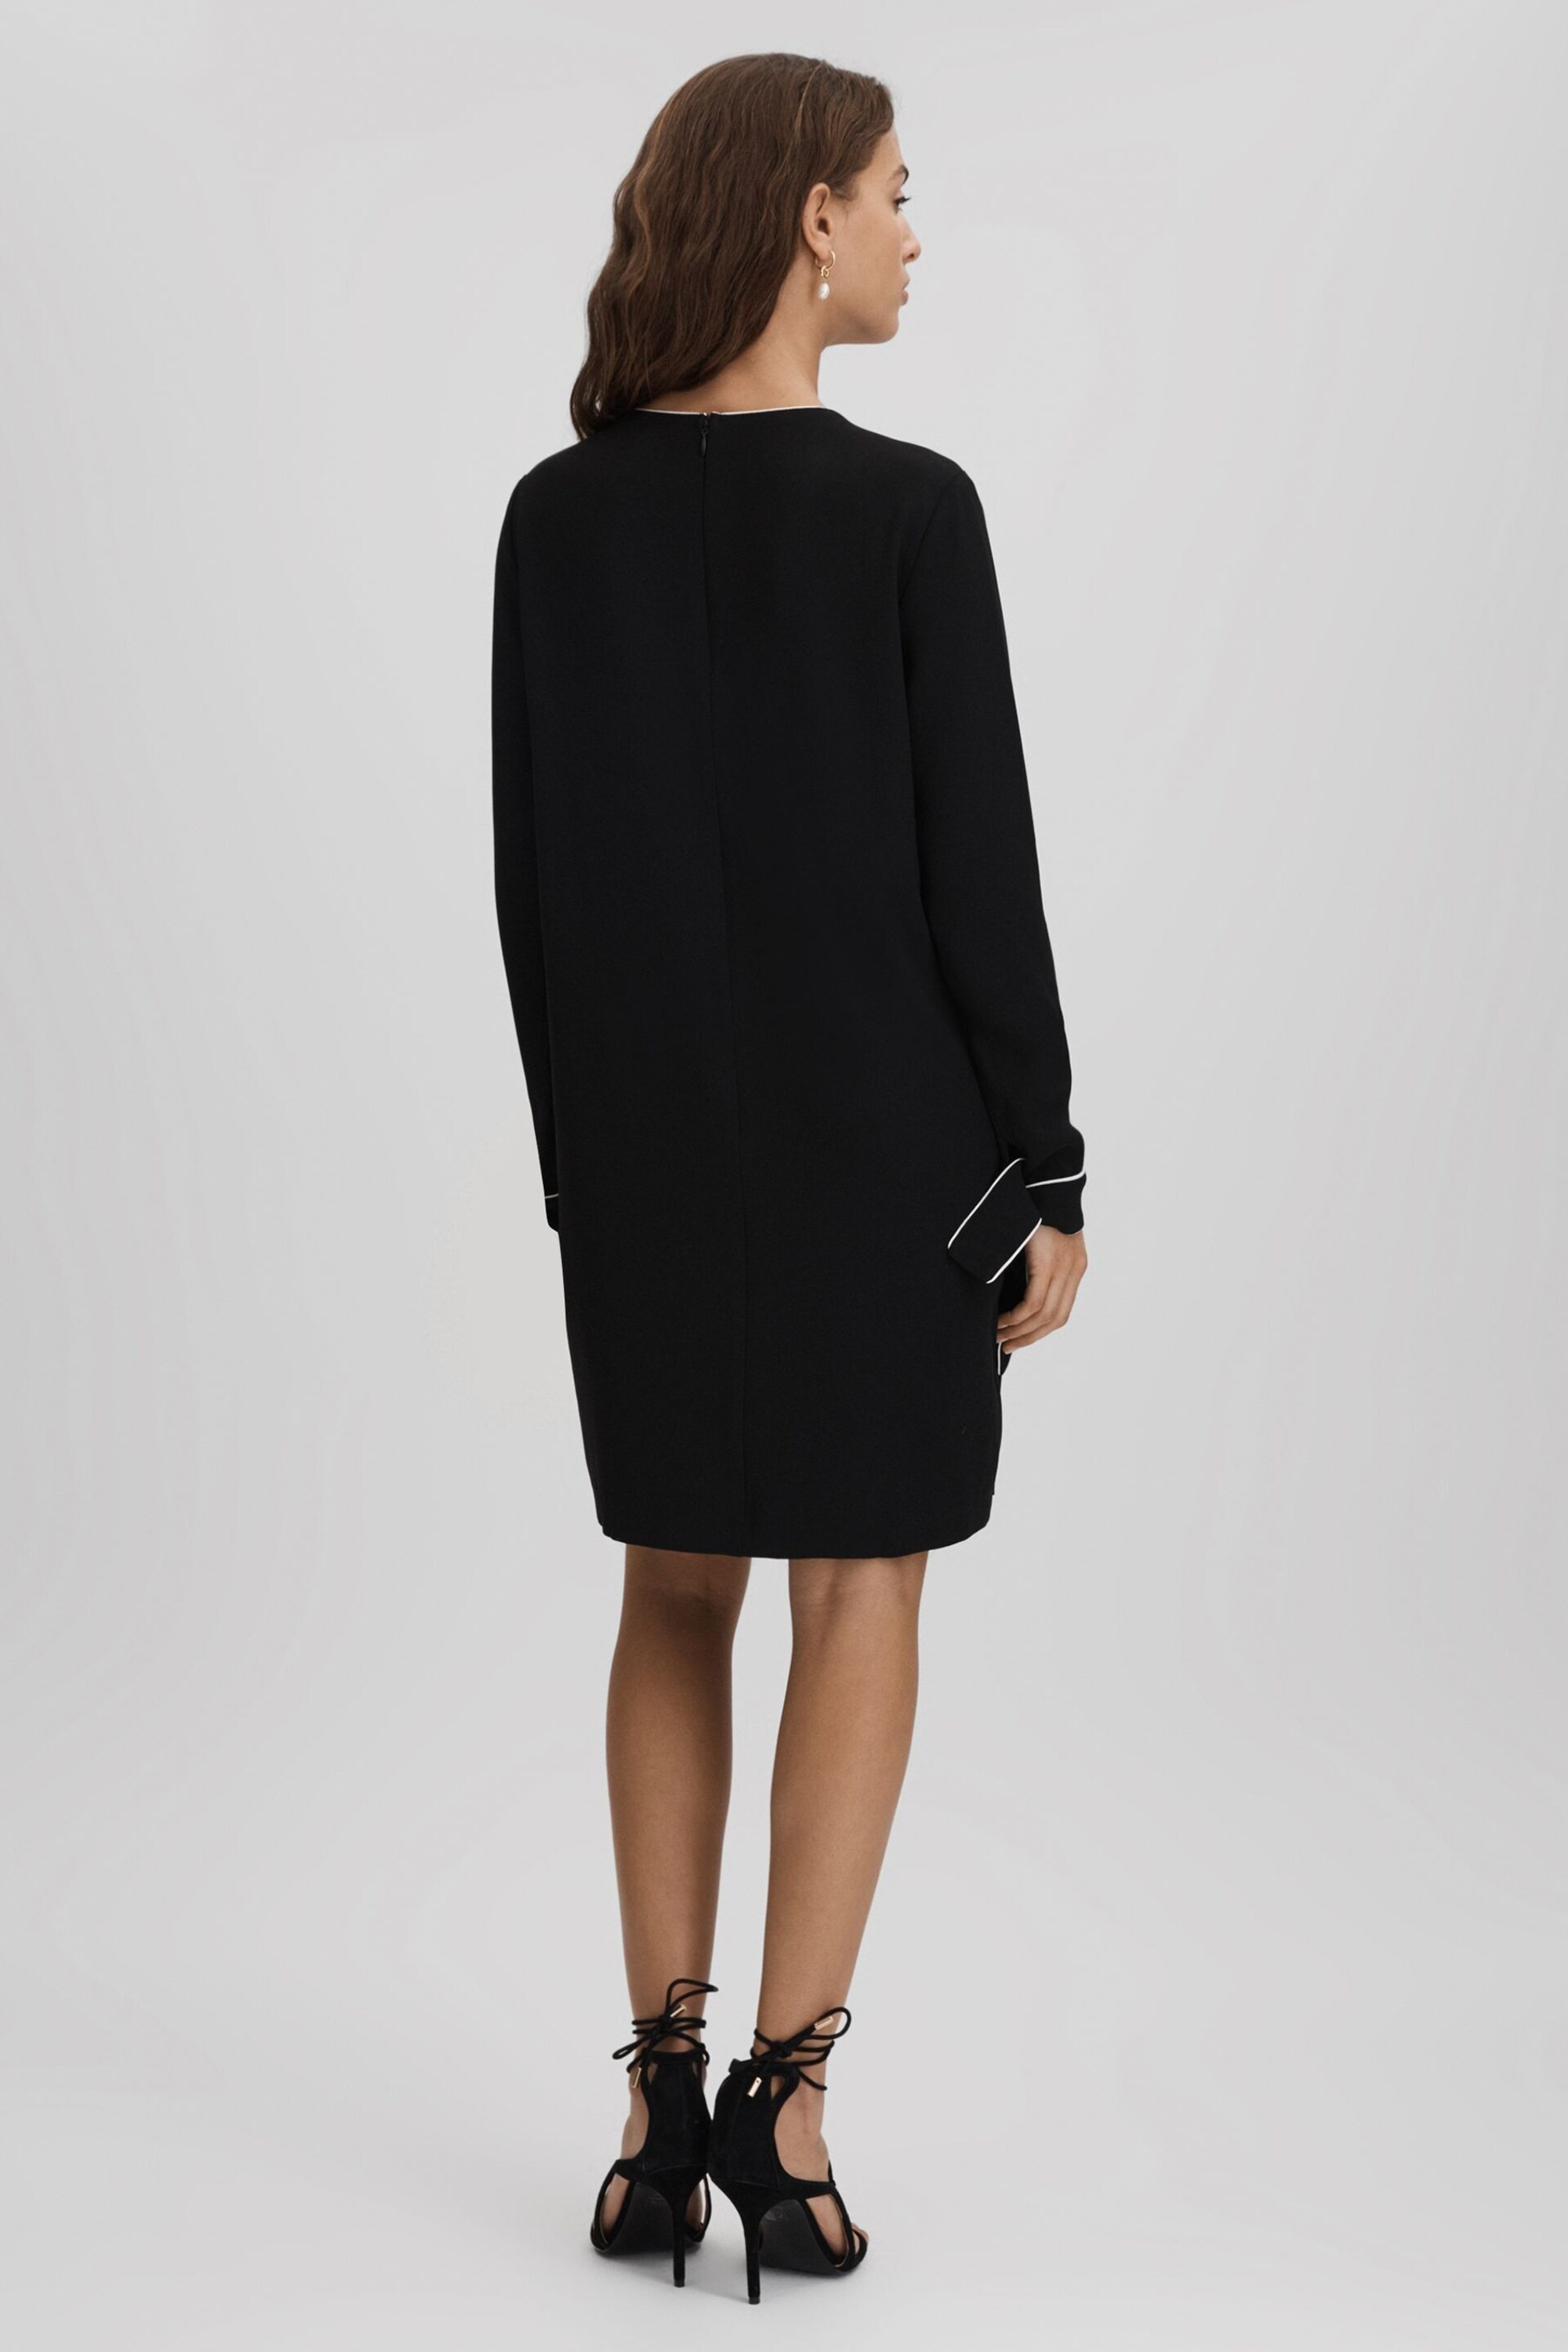 Reiss Black Eloise Shift Mini Dress - Image 5 of 7